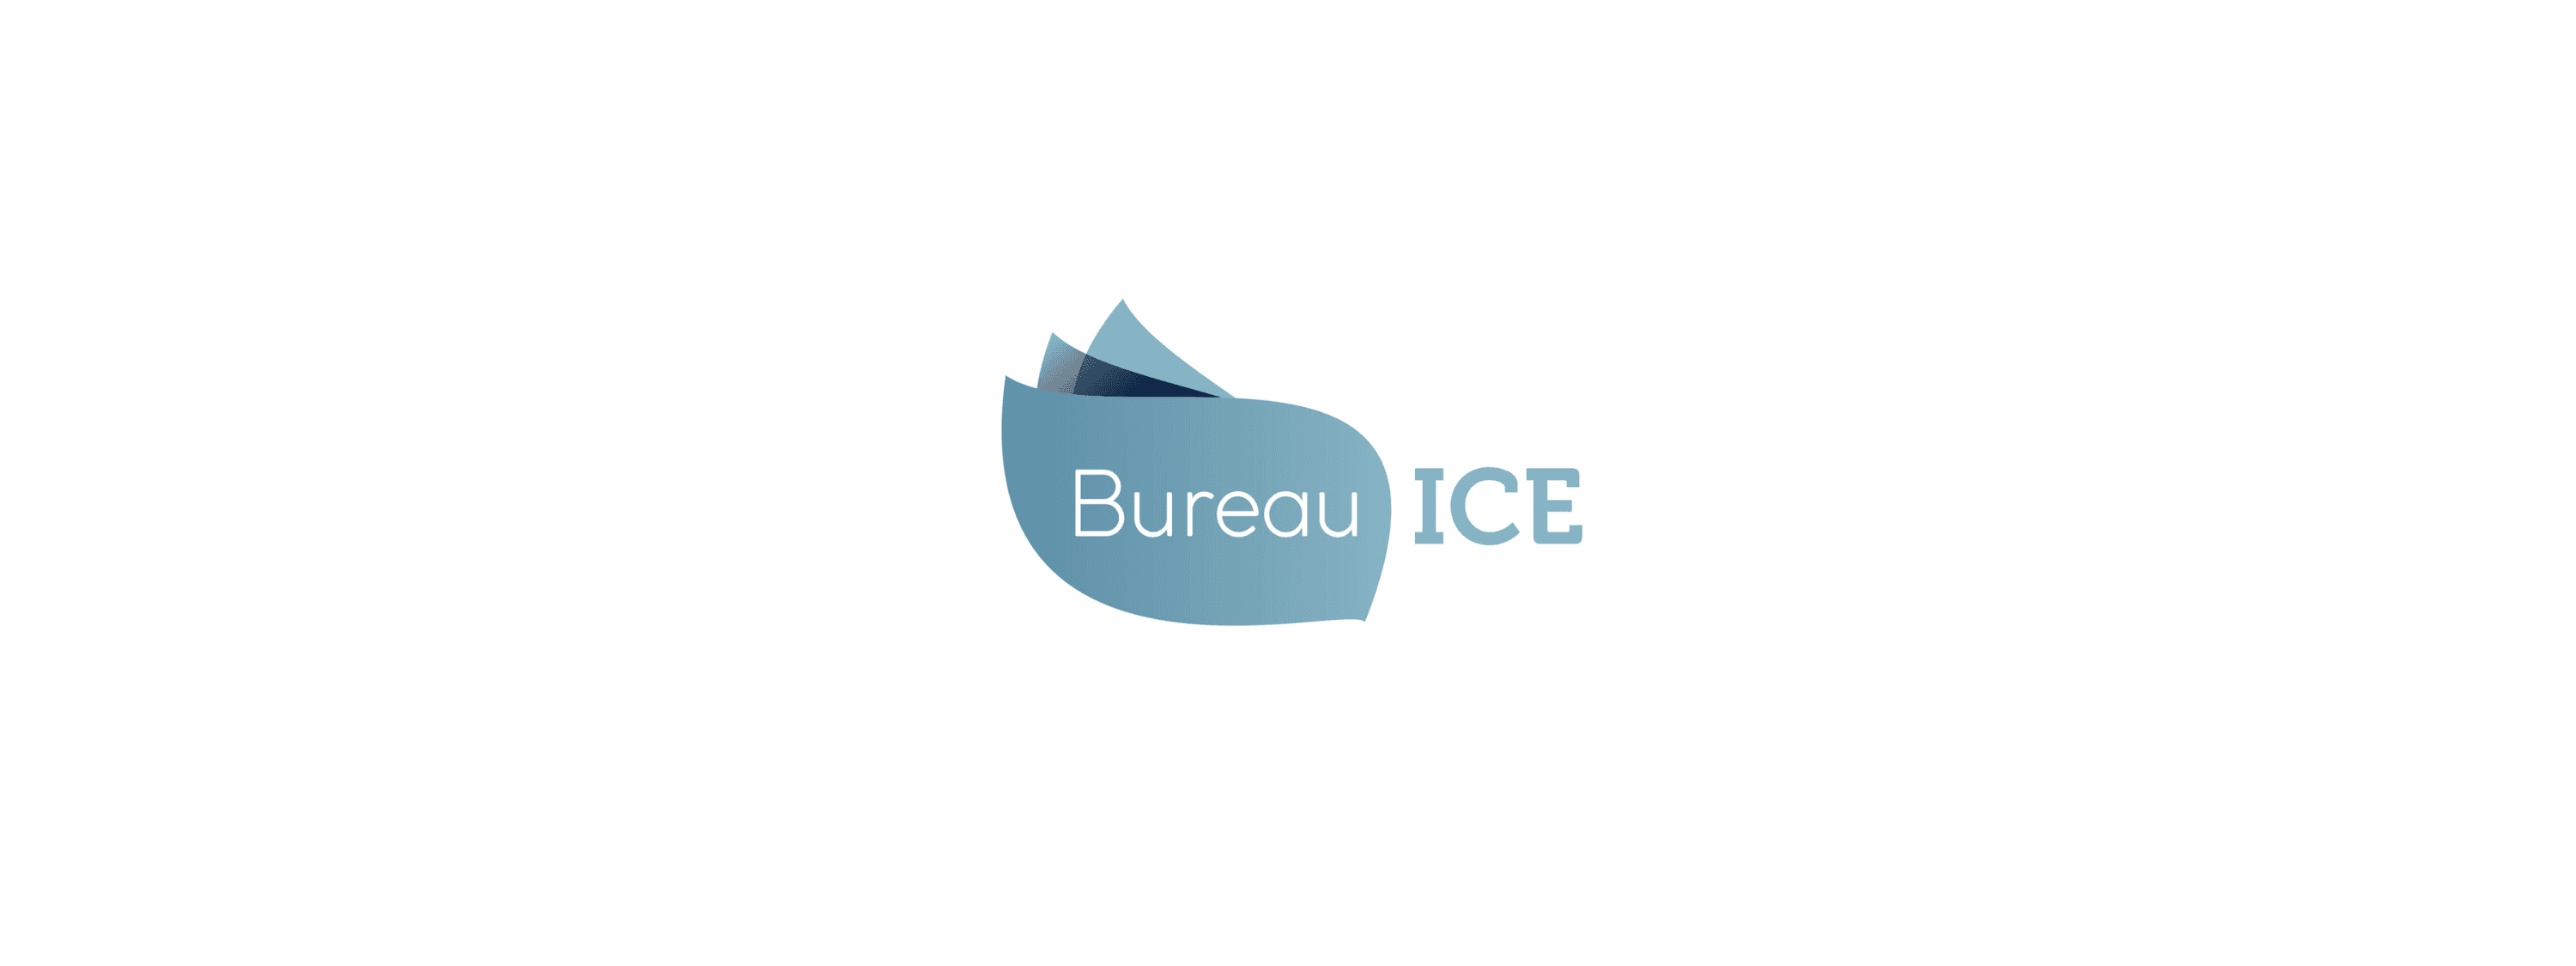 Bureau ICE header